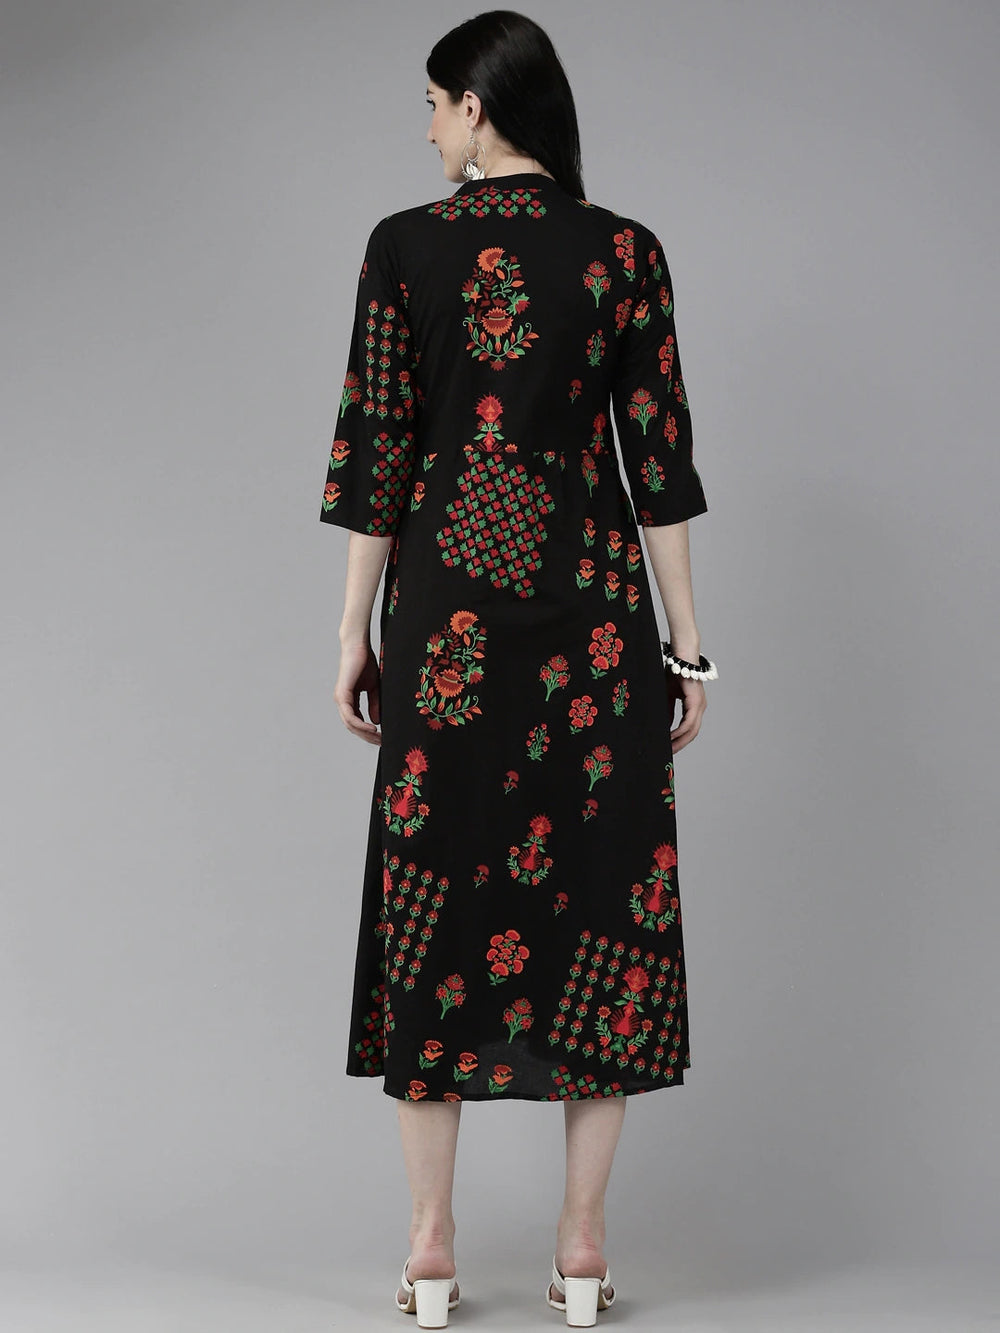 Black Printed A-Line Dress-Yufta Store-5501DRSBKS